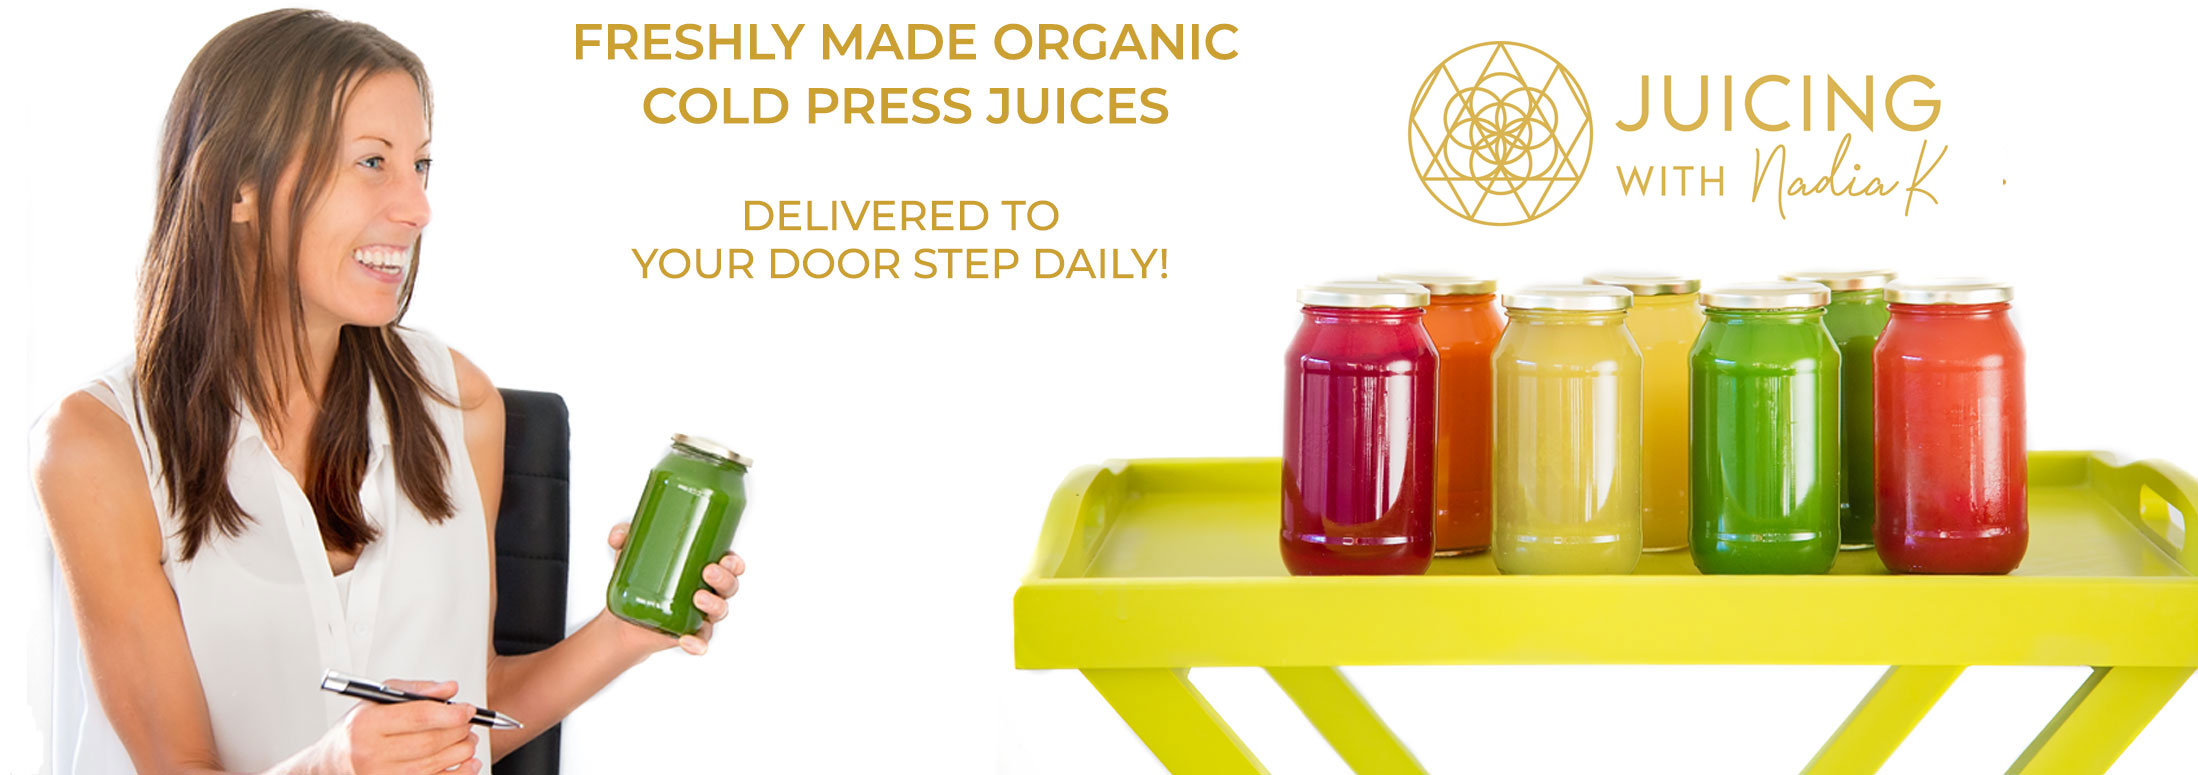 Freshly Made Organic Cold Press Juices Banner - Delivered Australia Wide